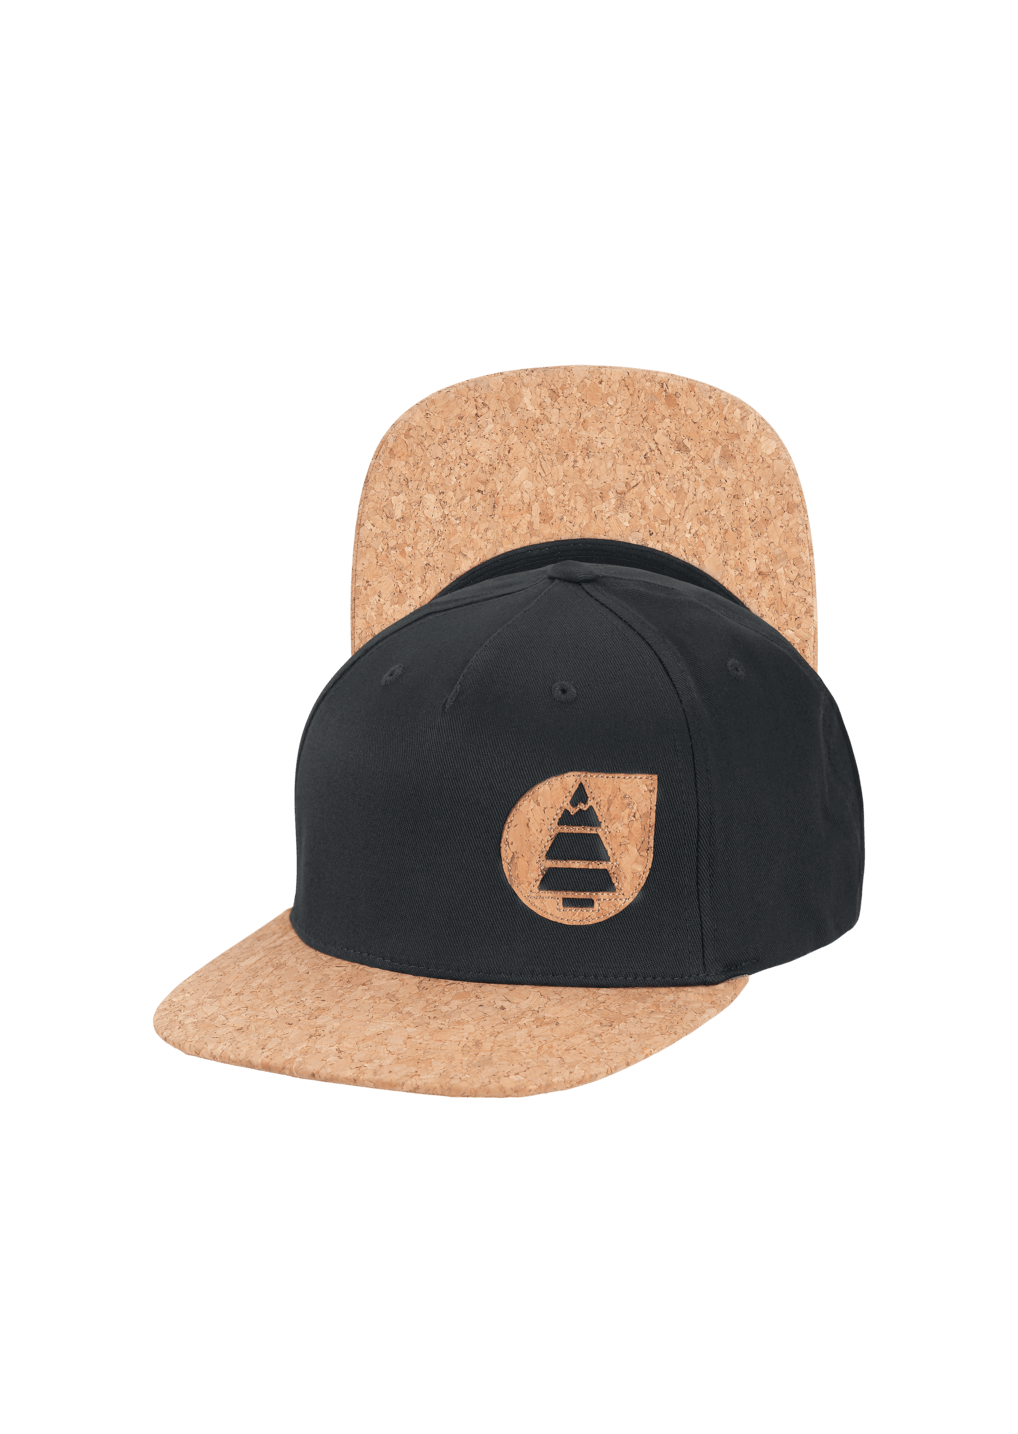 Casquette Narrow Cap - Black - Picture face